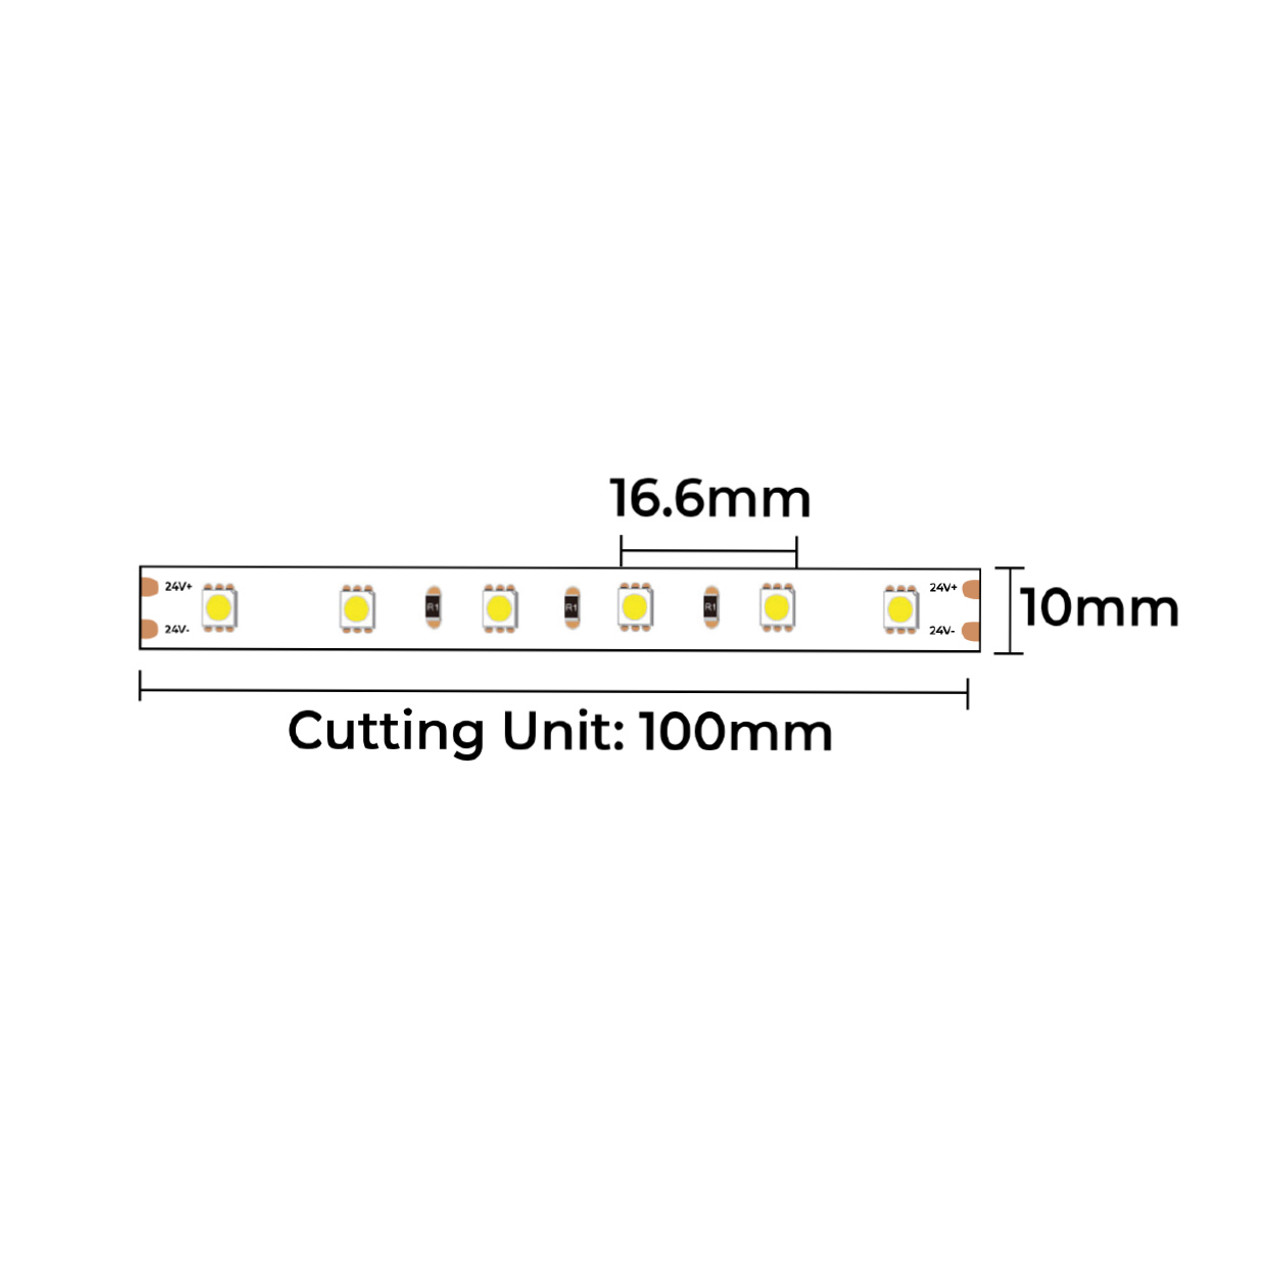 RGB LED strip 24 volt 5 meters IP33 - All Day Led - for 12 & 24 Volt